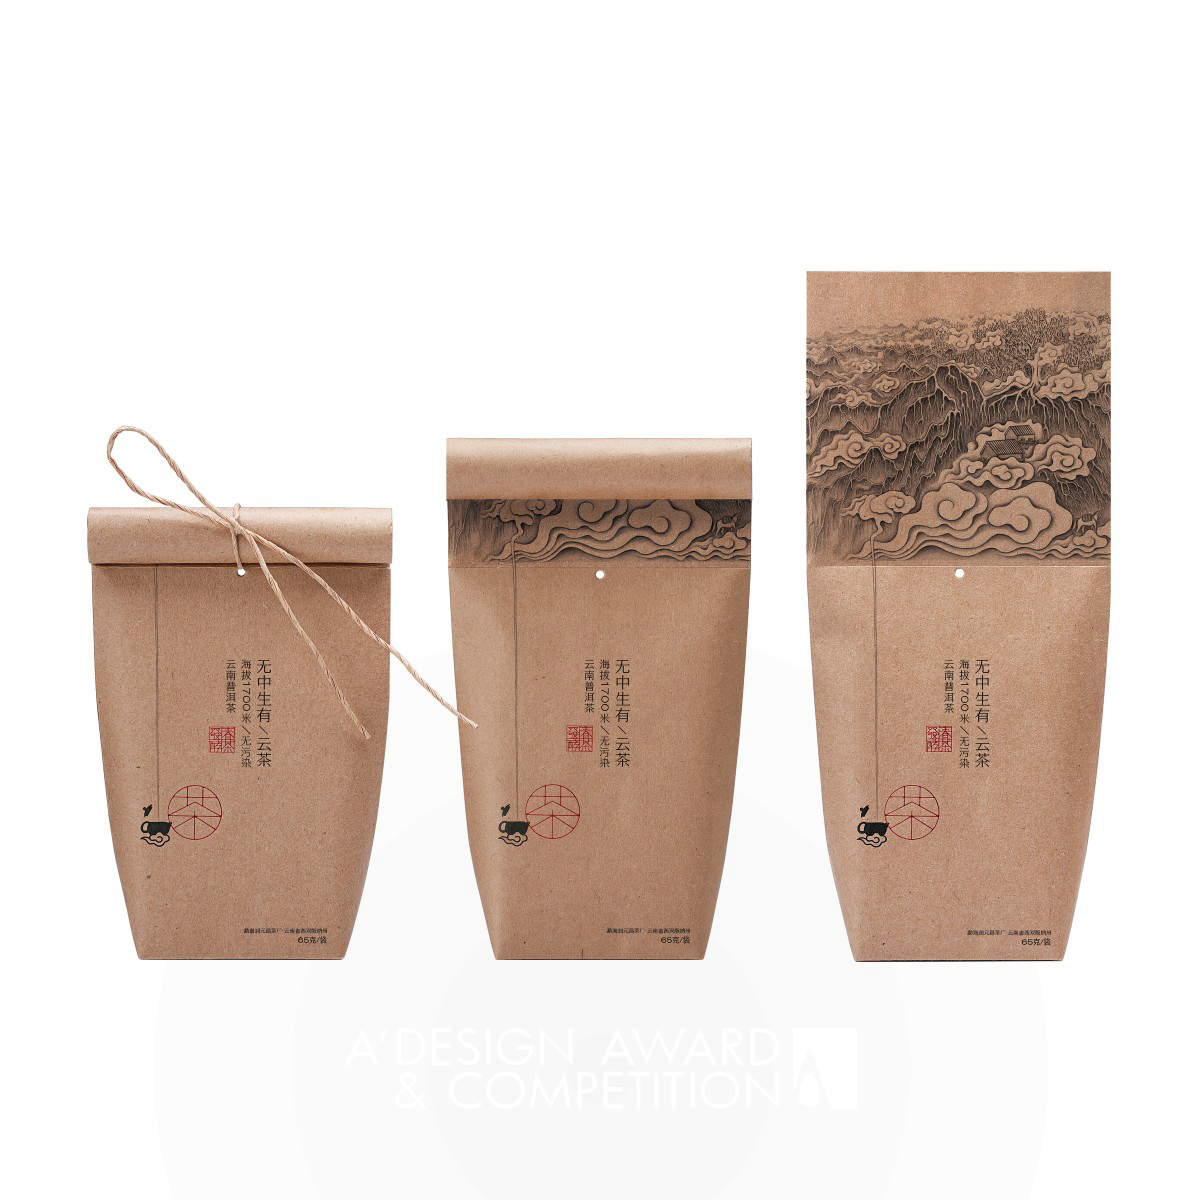 Cloudy Tea tea packaging by Lin shaobin